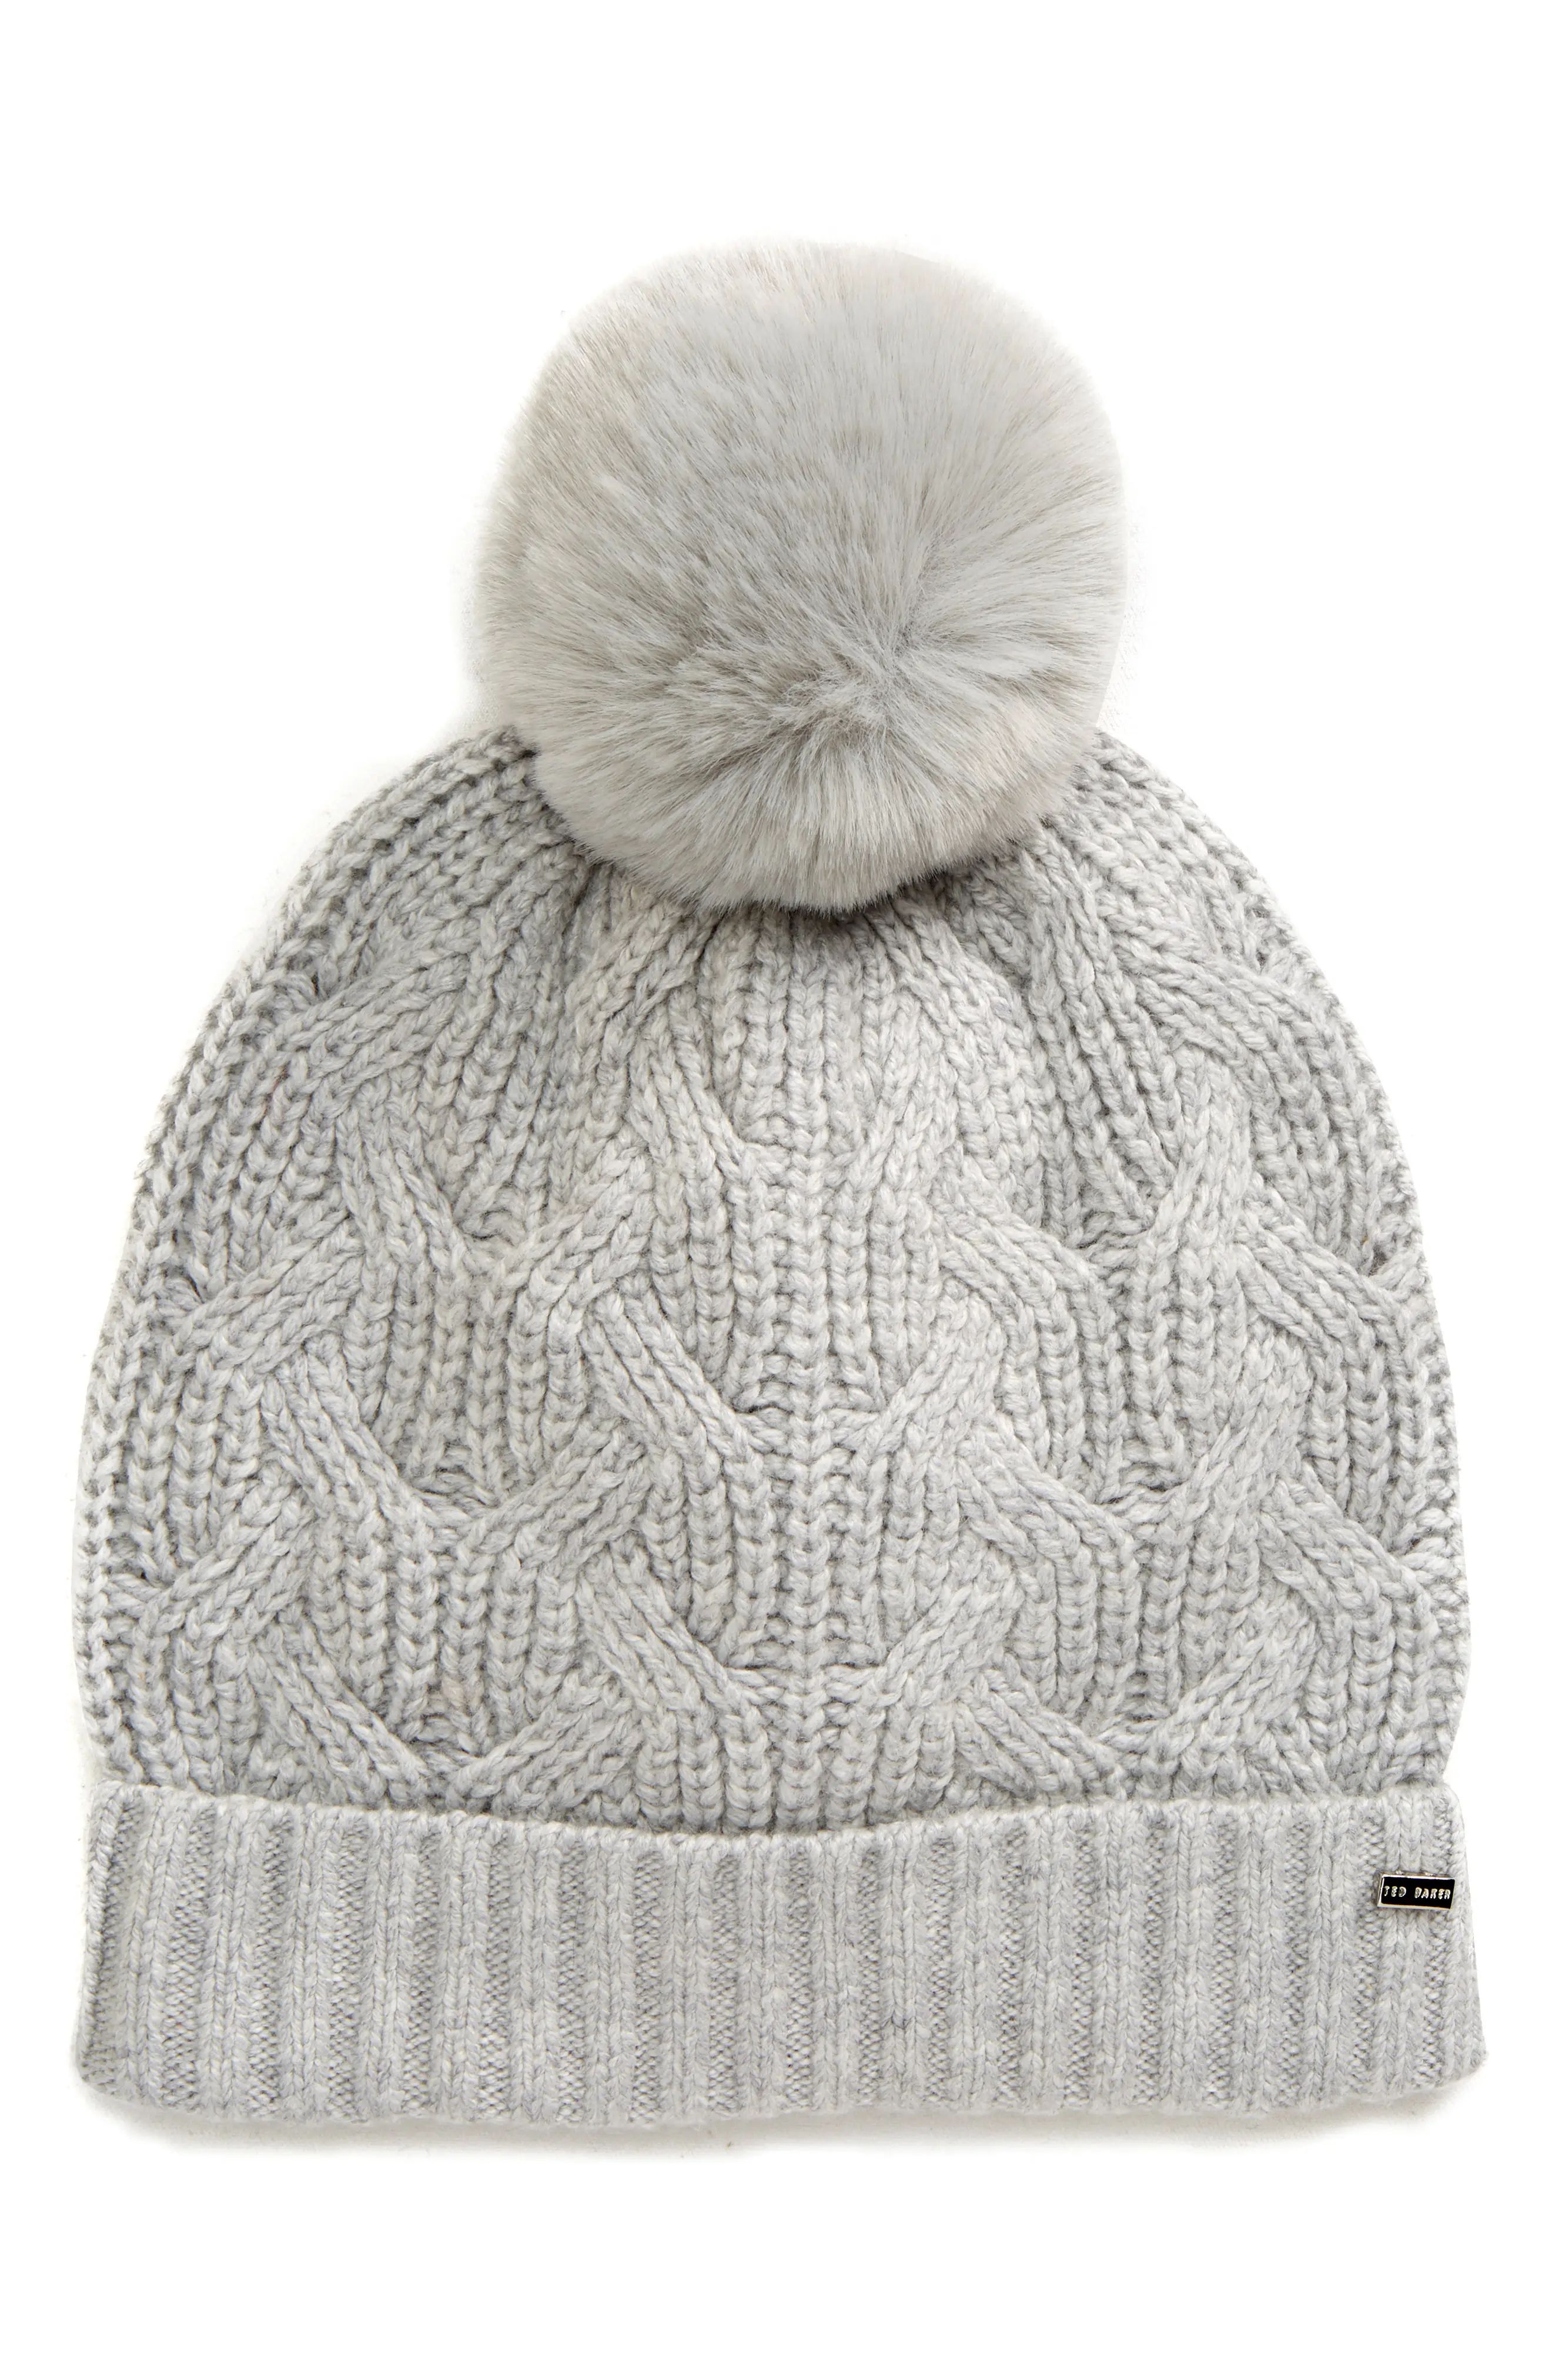 Women's Ted Baker London Peppier Faux Fur Pompom Hat, Size One Size - Grey | Nordstrom